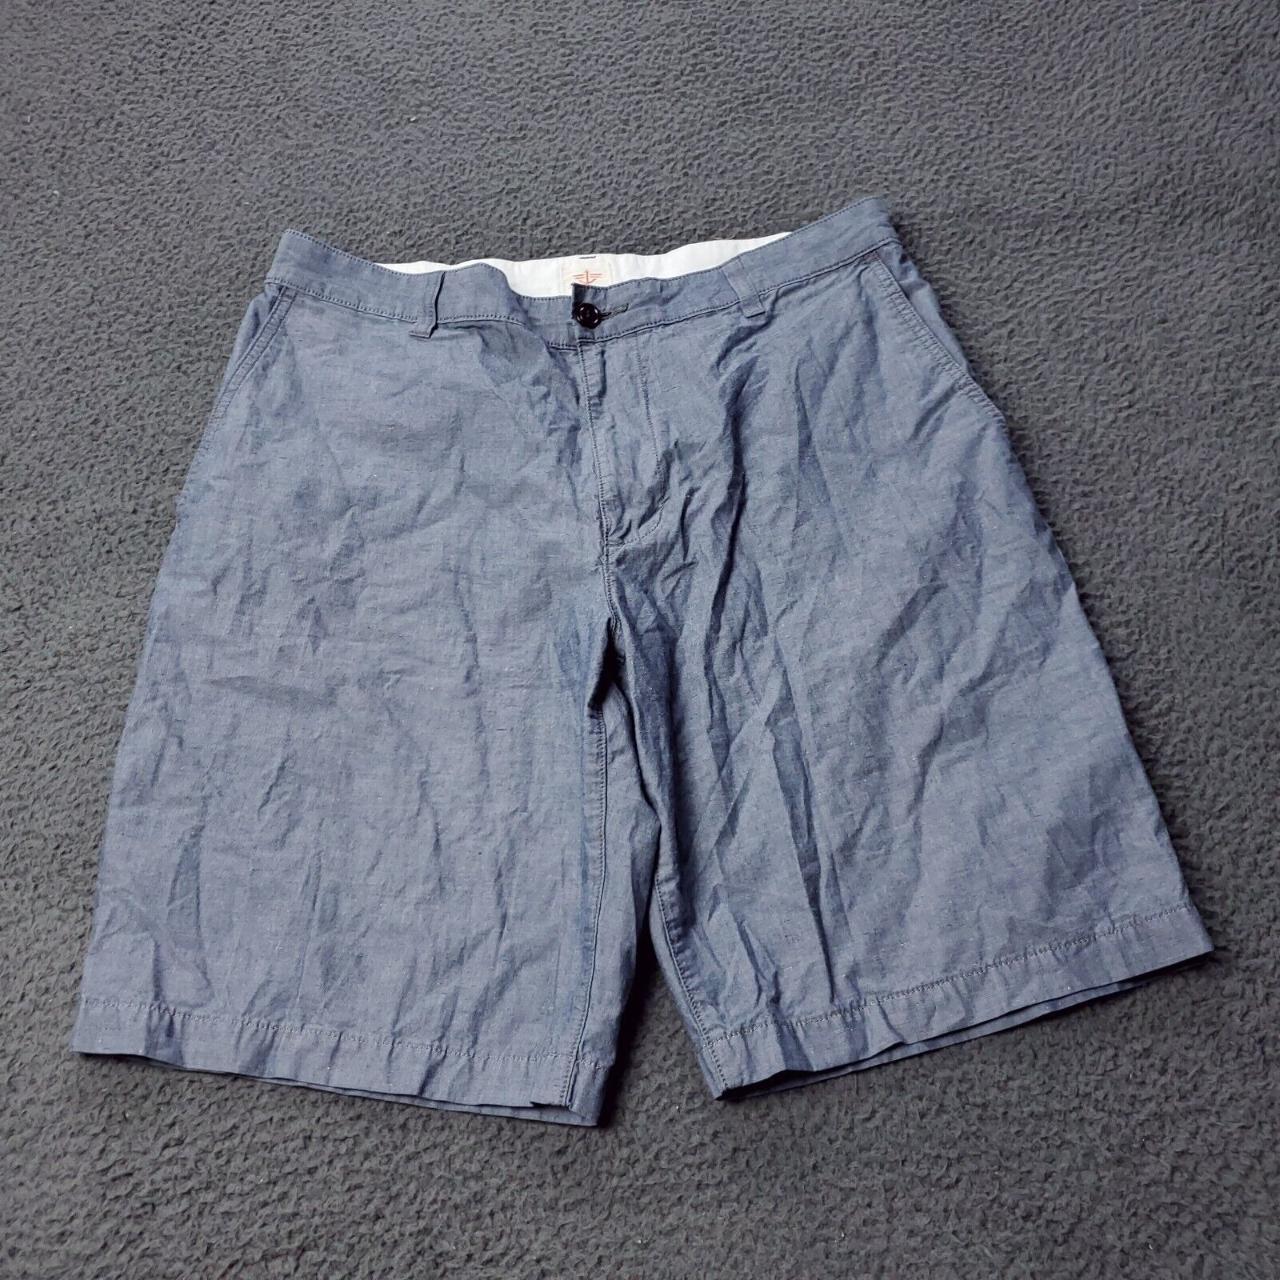 Dockers Men's Blue Shorts